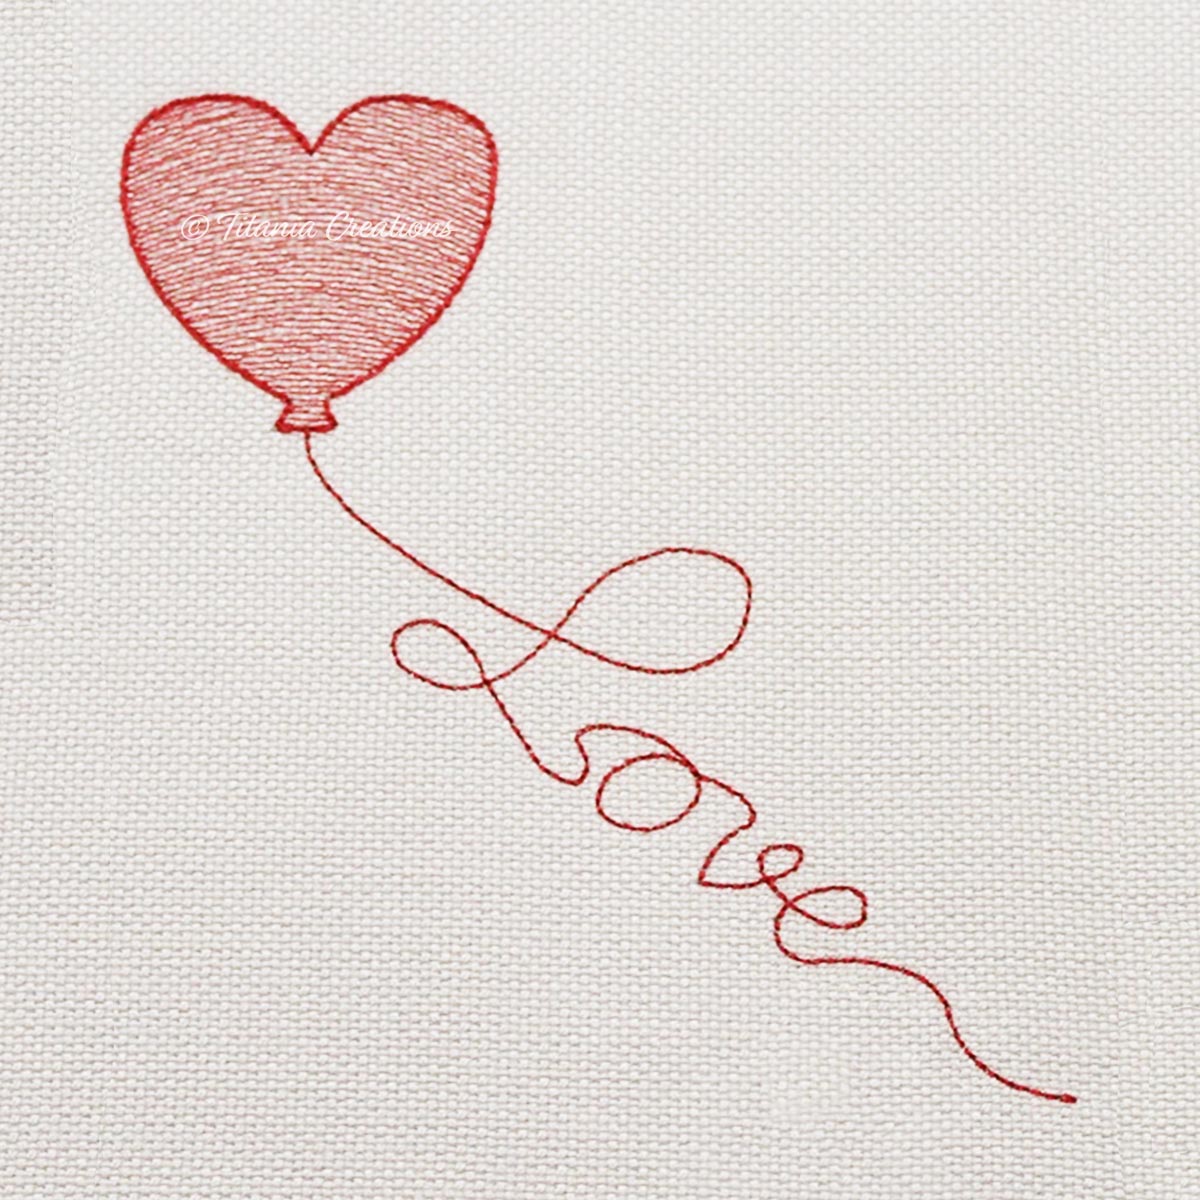 Love Heart Balloon 4x4 5x7